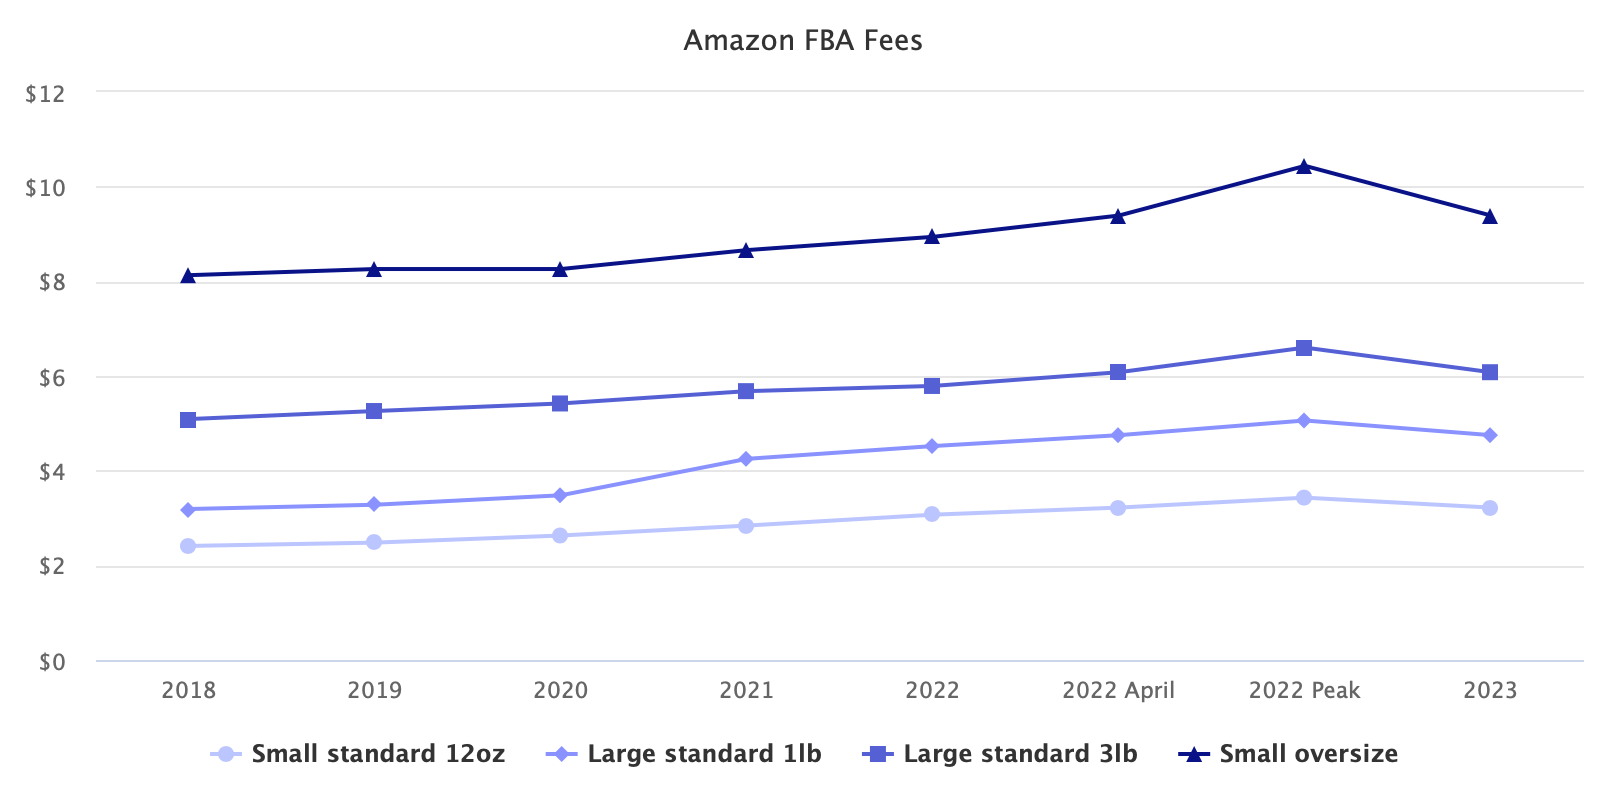 Amazon FBA fees